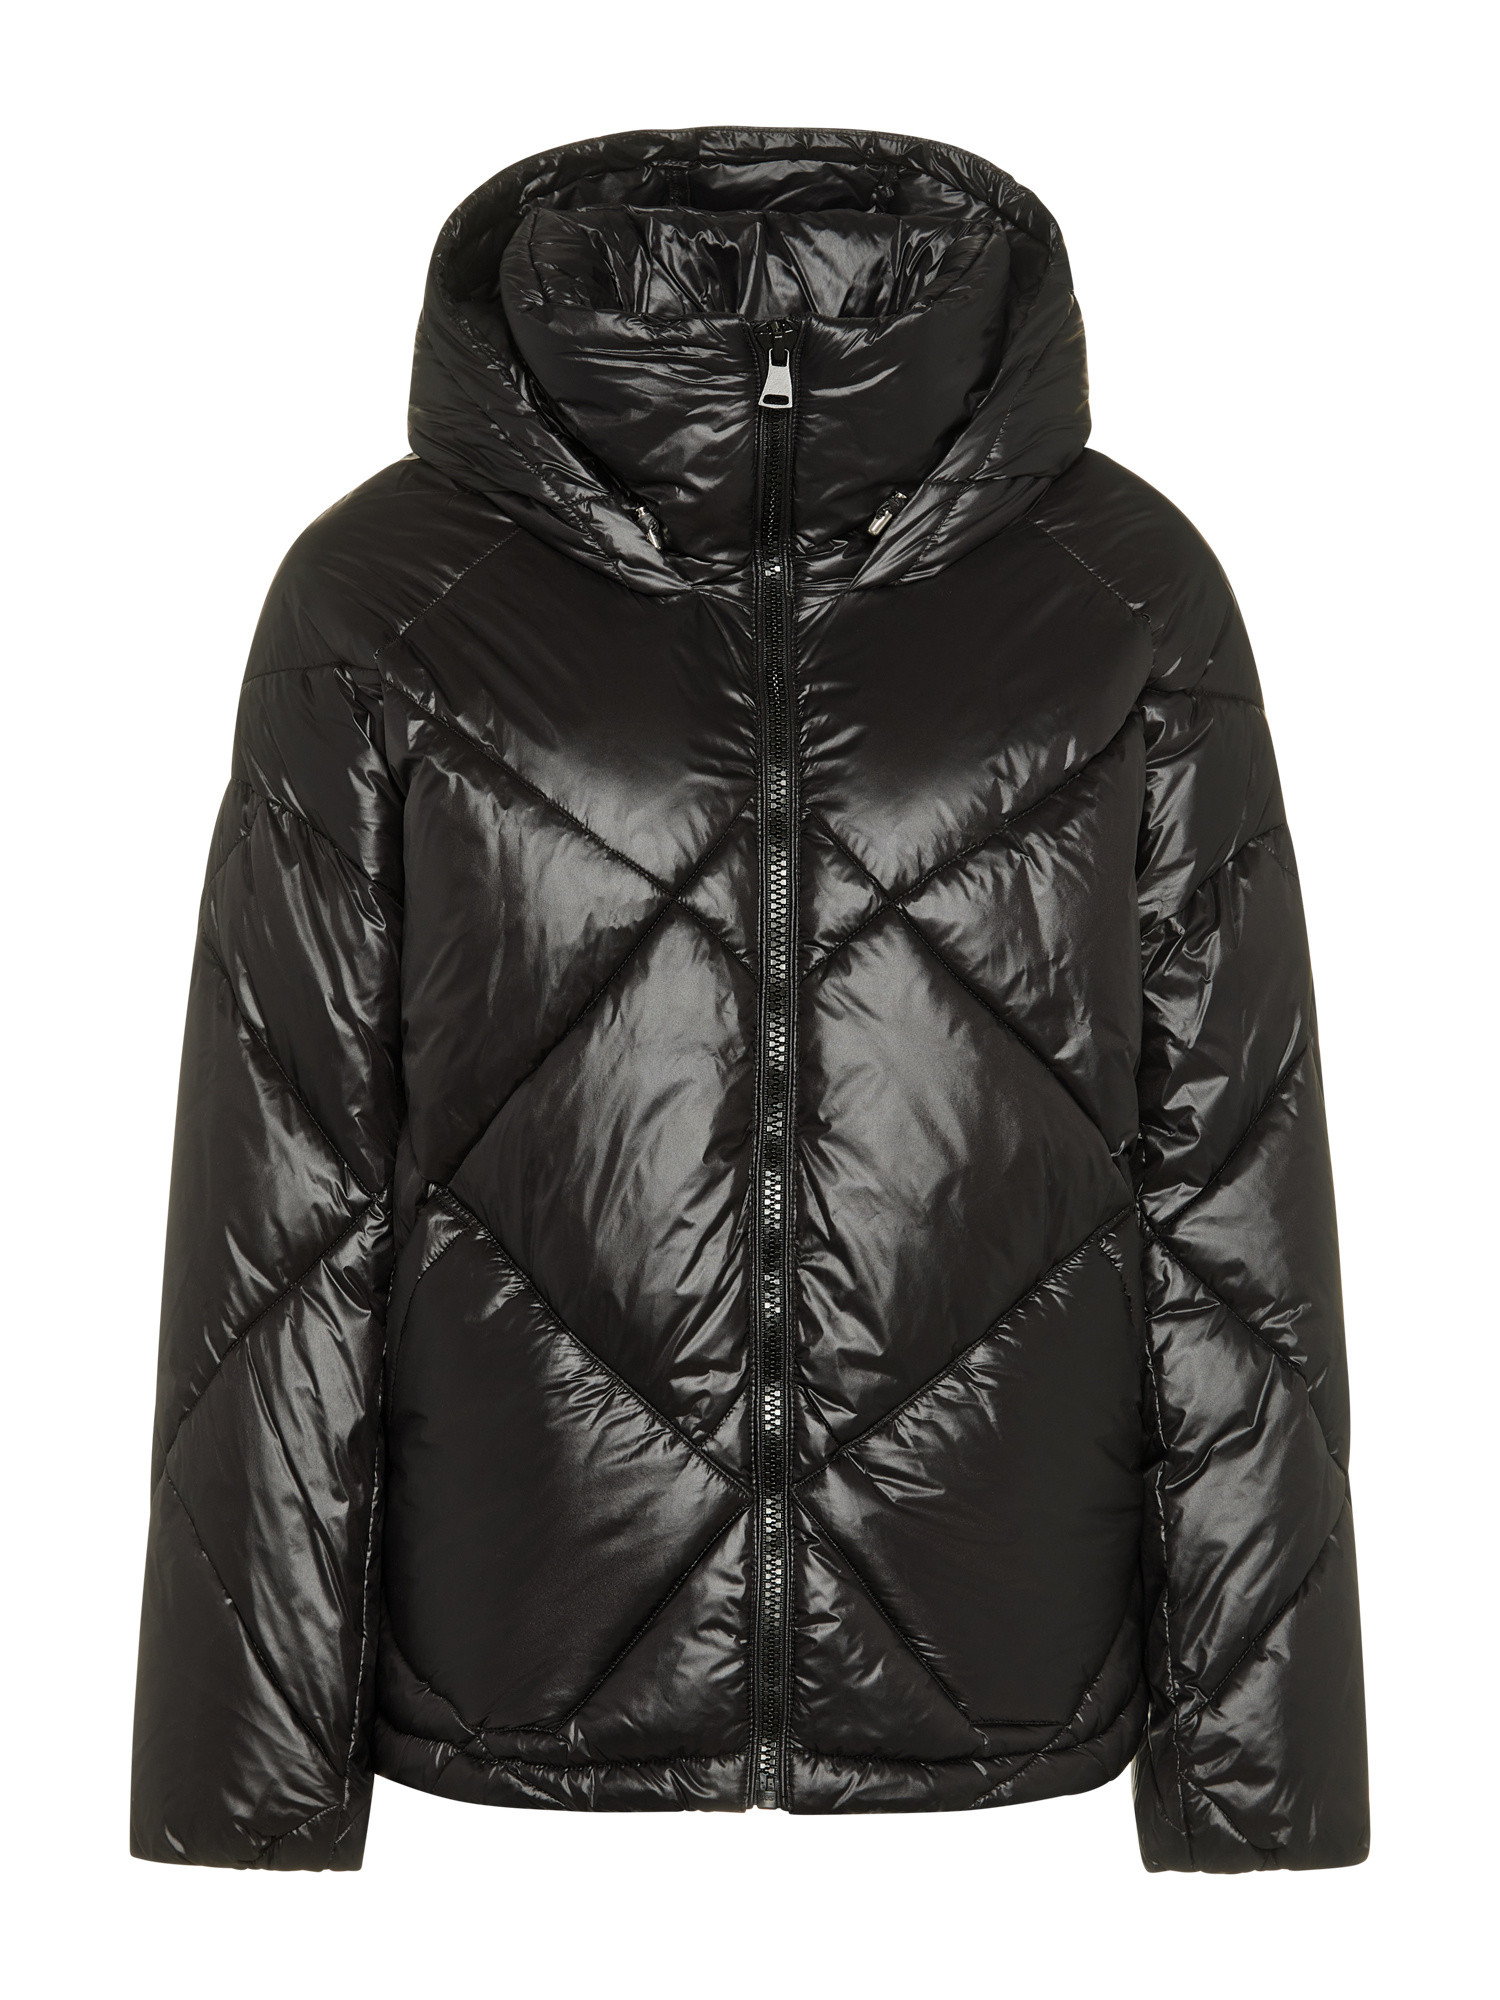 Oof Wear - Short oversized jacket with hood, Black, large image number 0